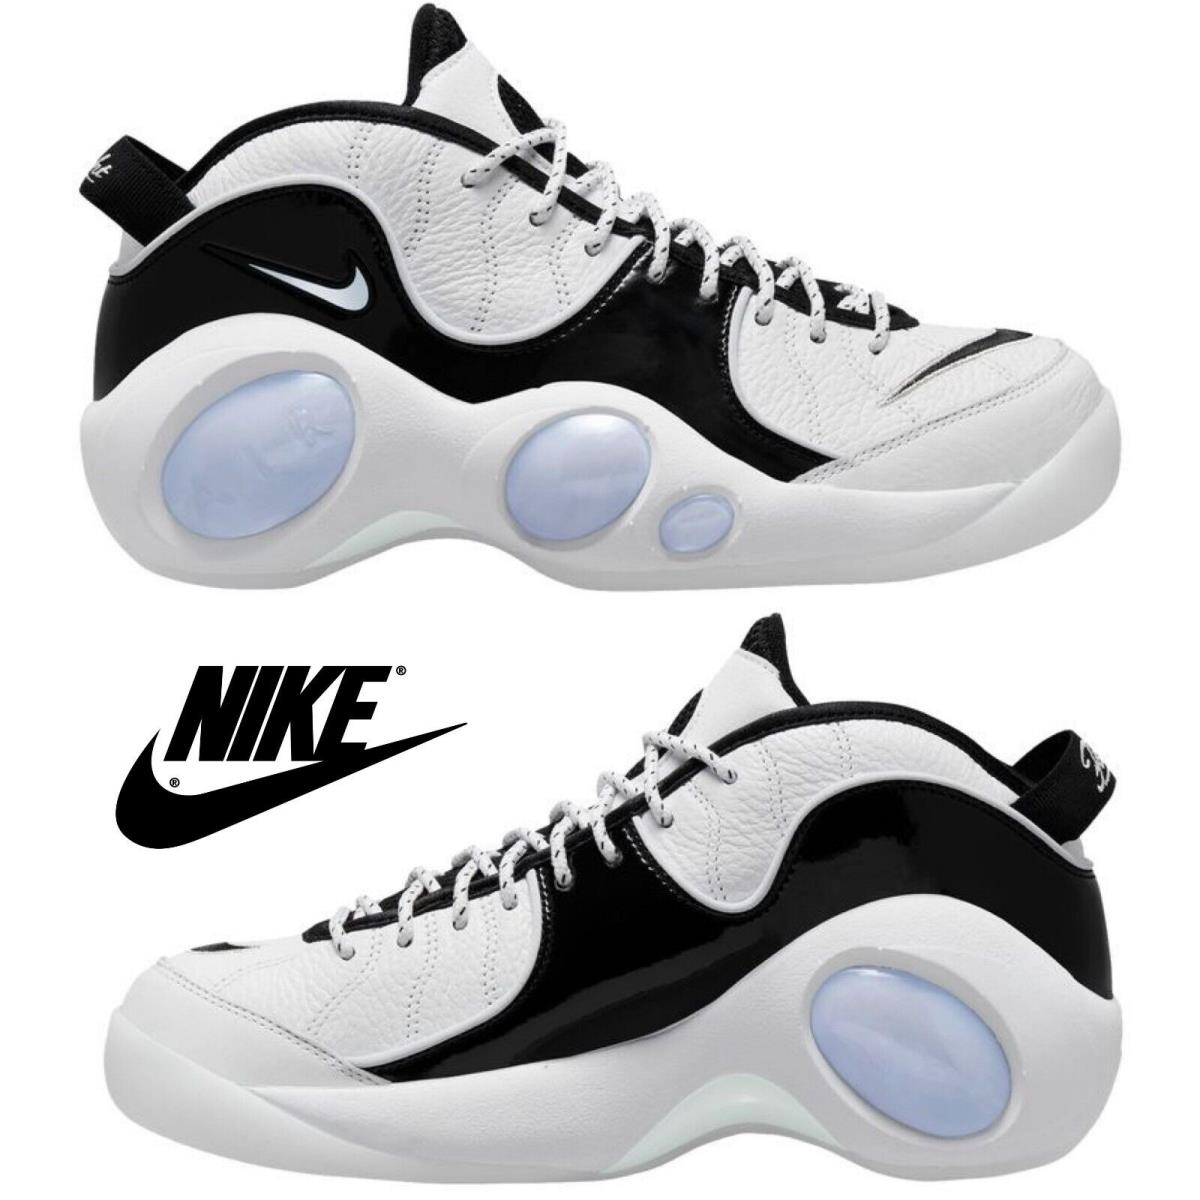 Nike Air Zoom Flight 95 Men`s Basketball Sneakers Comfort Lightweight Shoes - White , White/Black/Grey Manufacturer